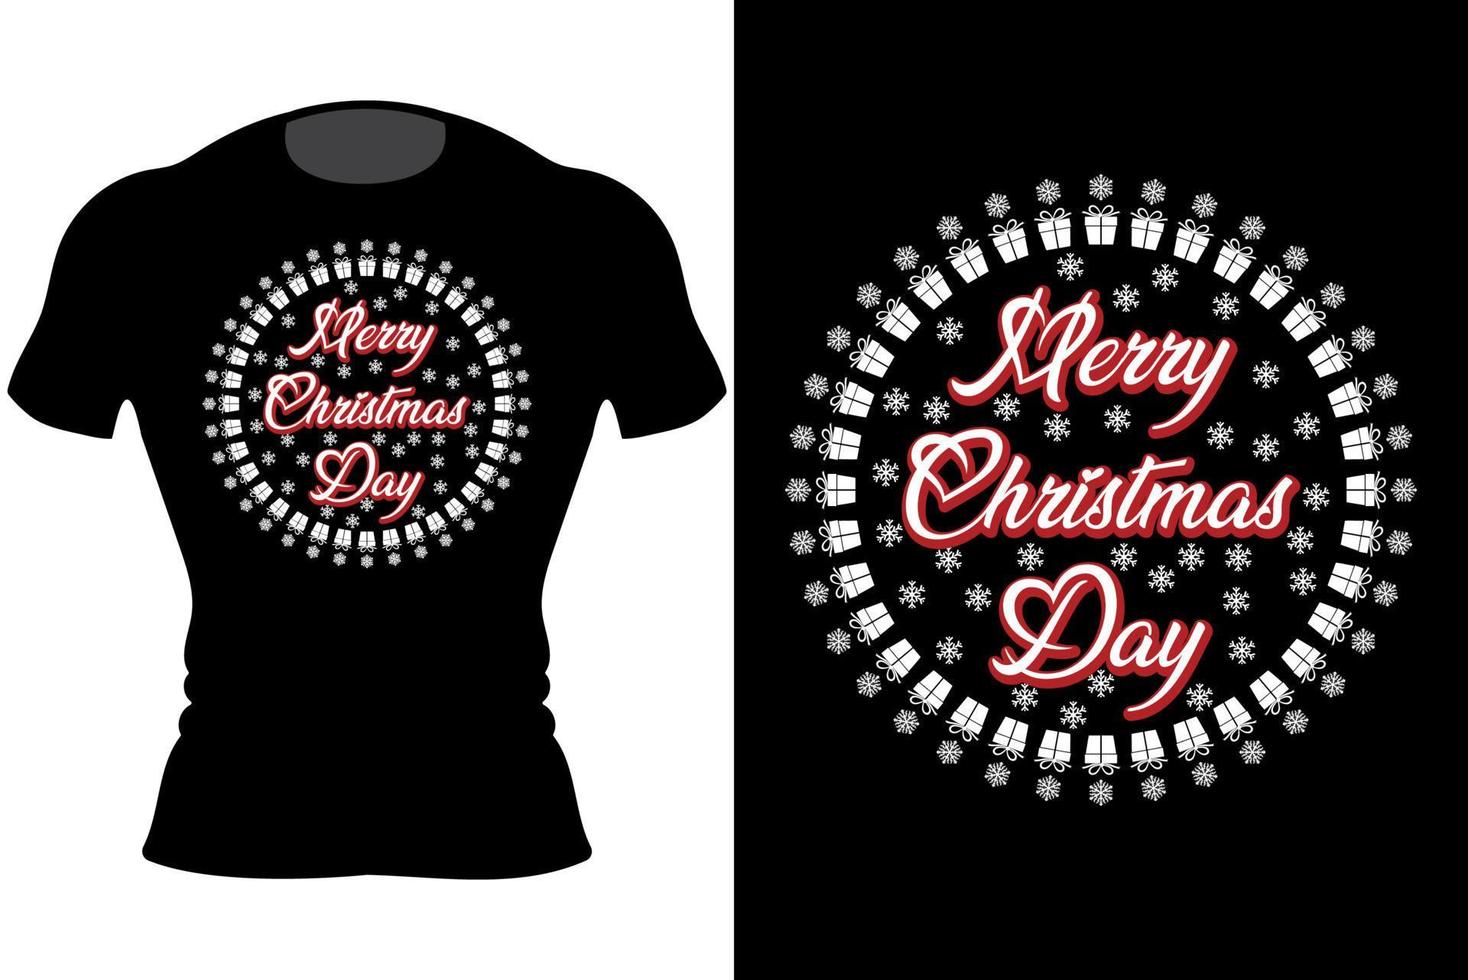 god jul typografi t-shirt design vektor